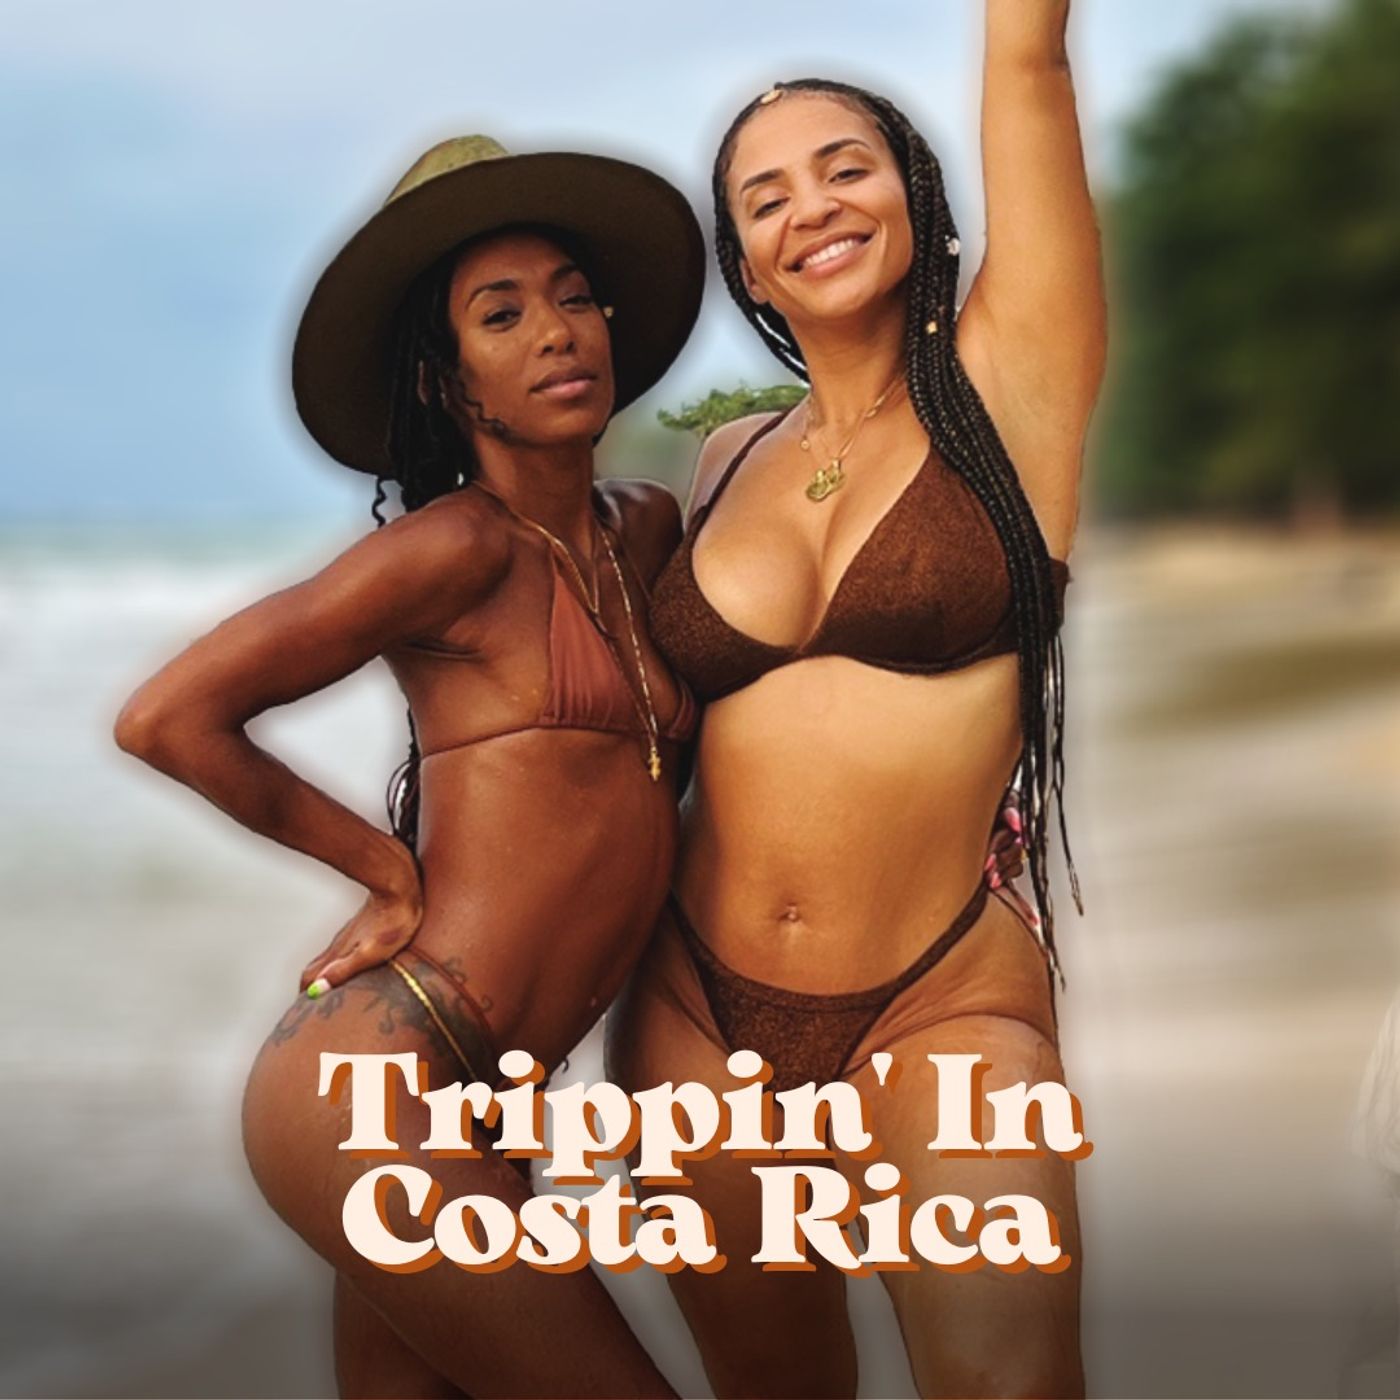 Trippin' In Costa Rica Image